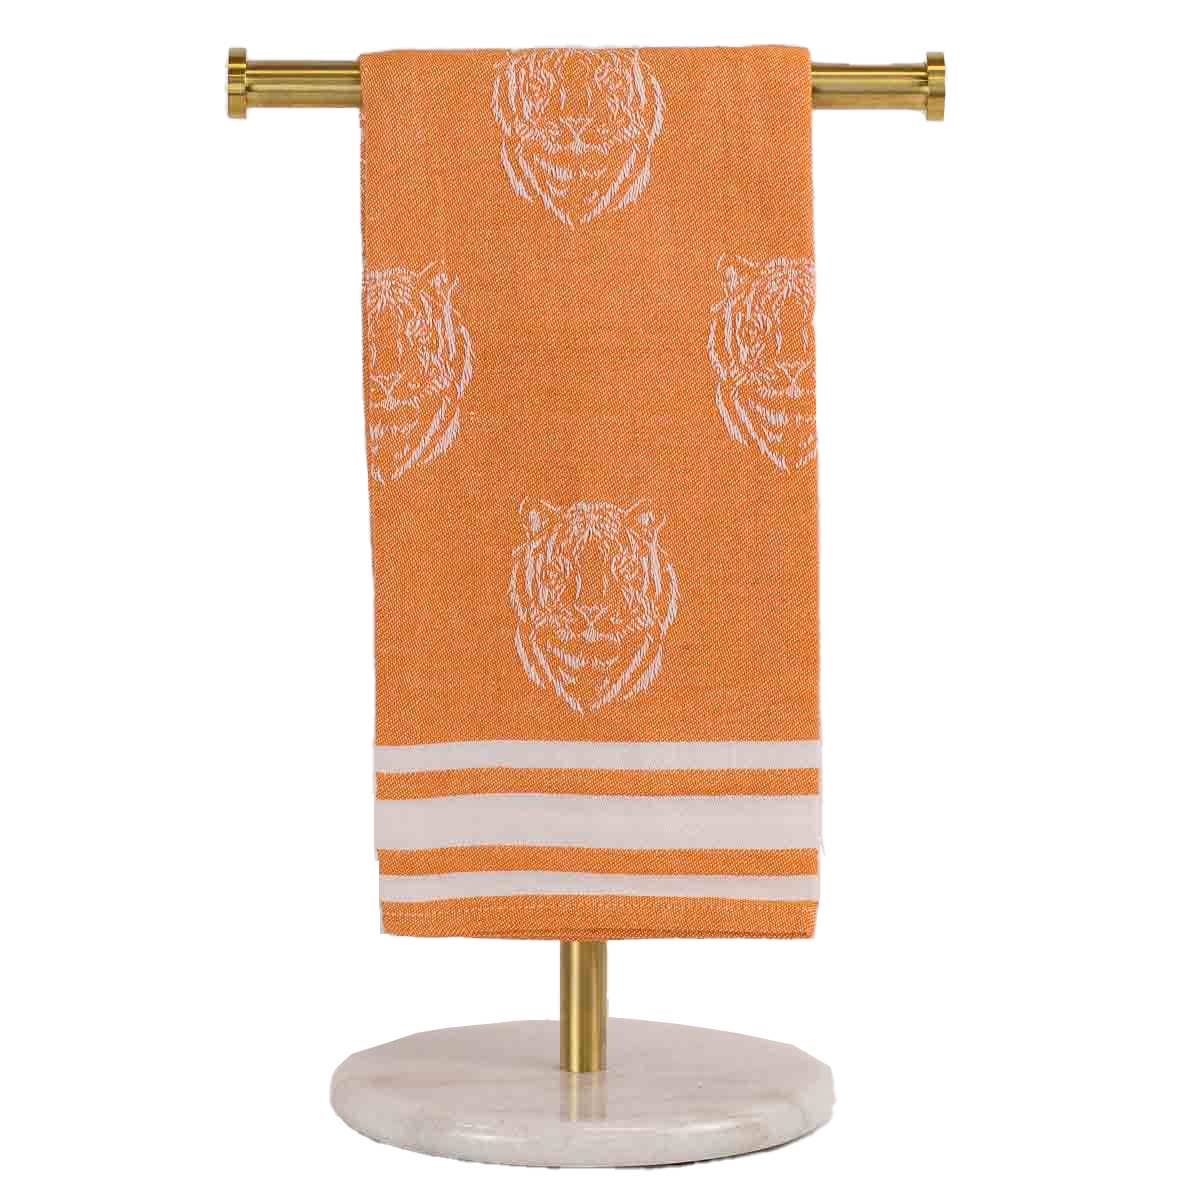 Jacquard Tiger Hand Towel   Orange/White   20x28